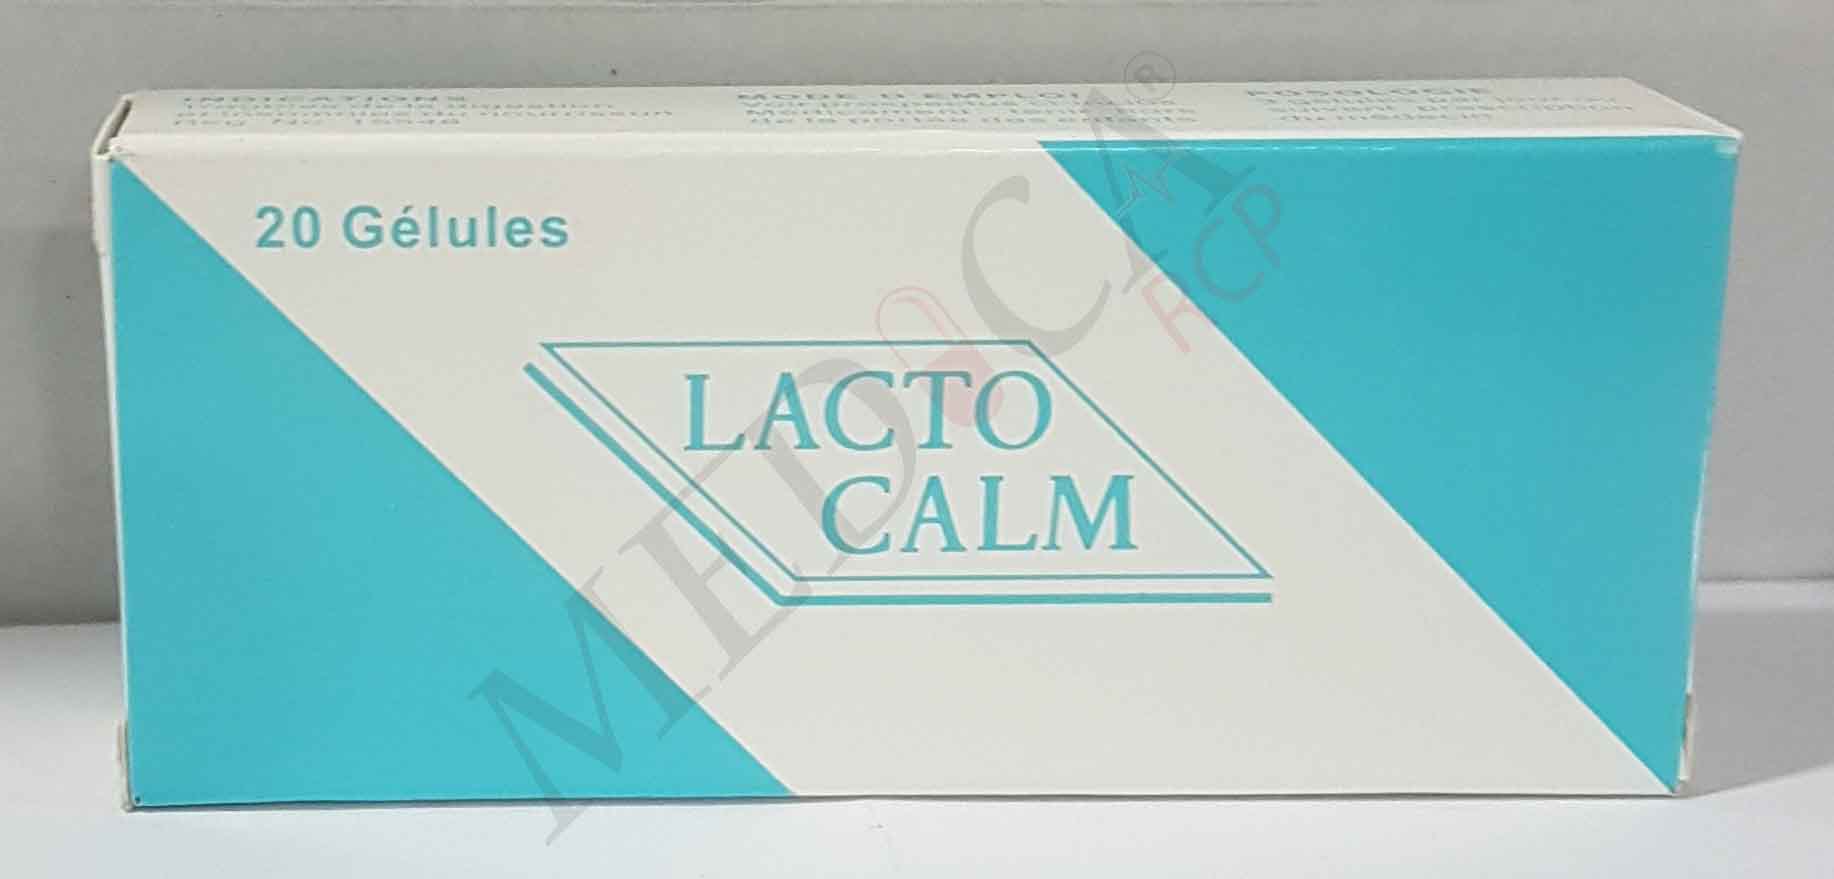 Lactocalm